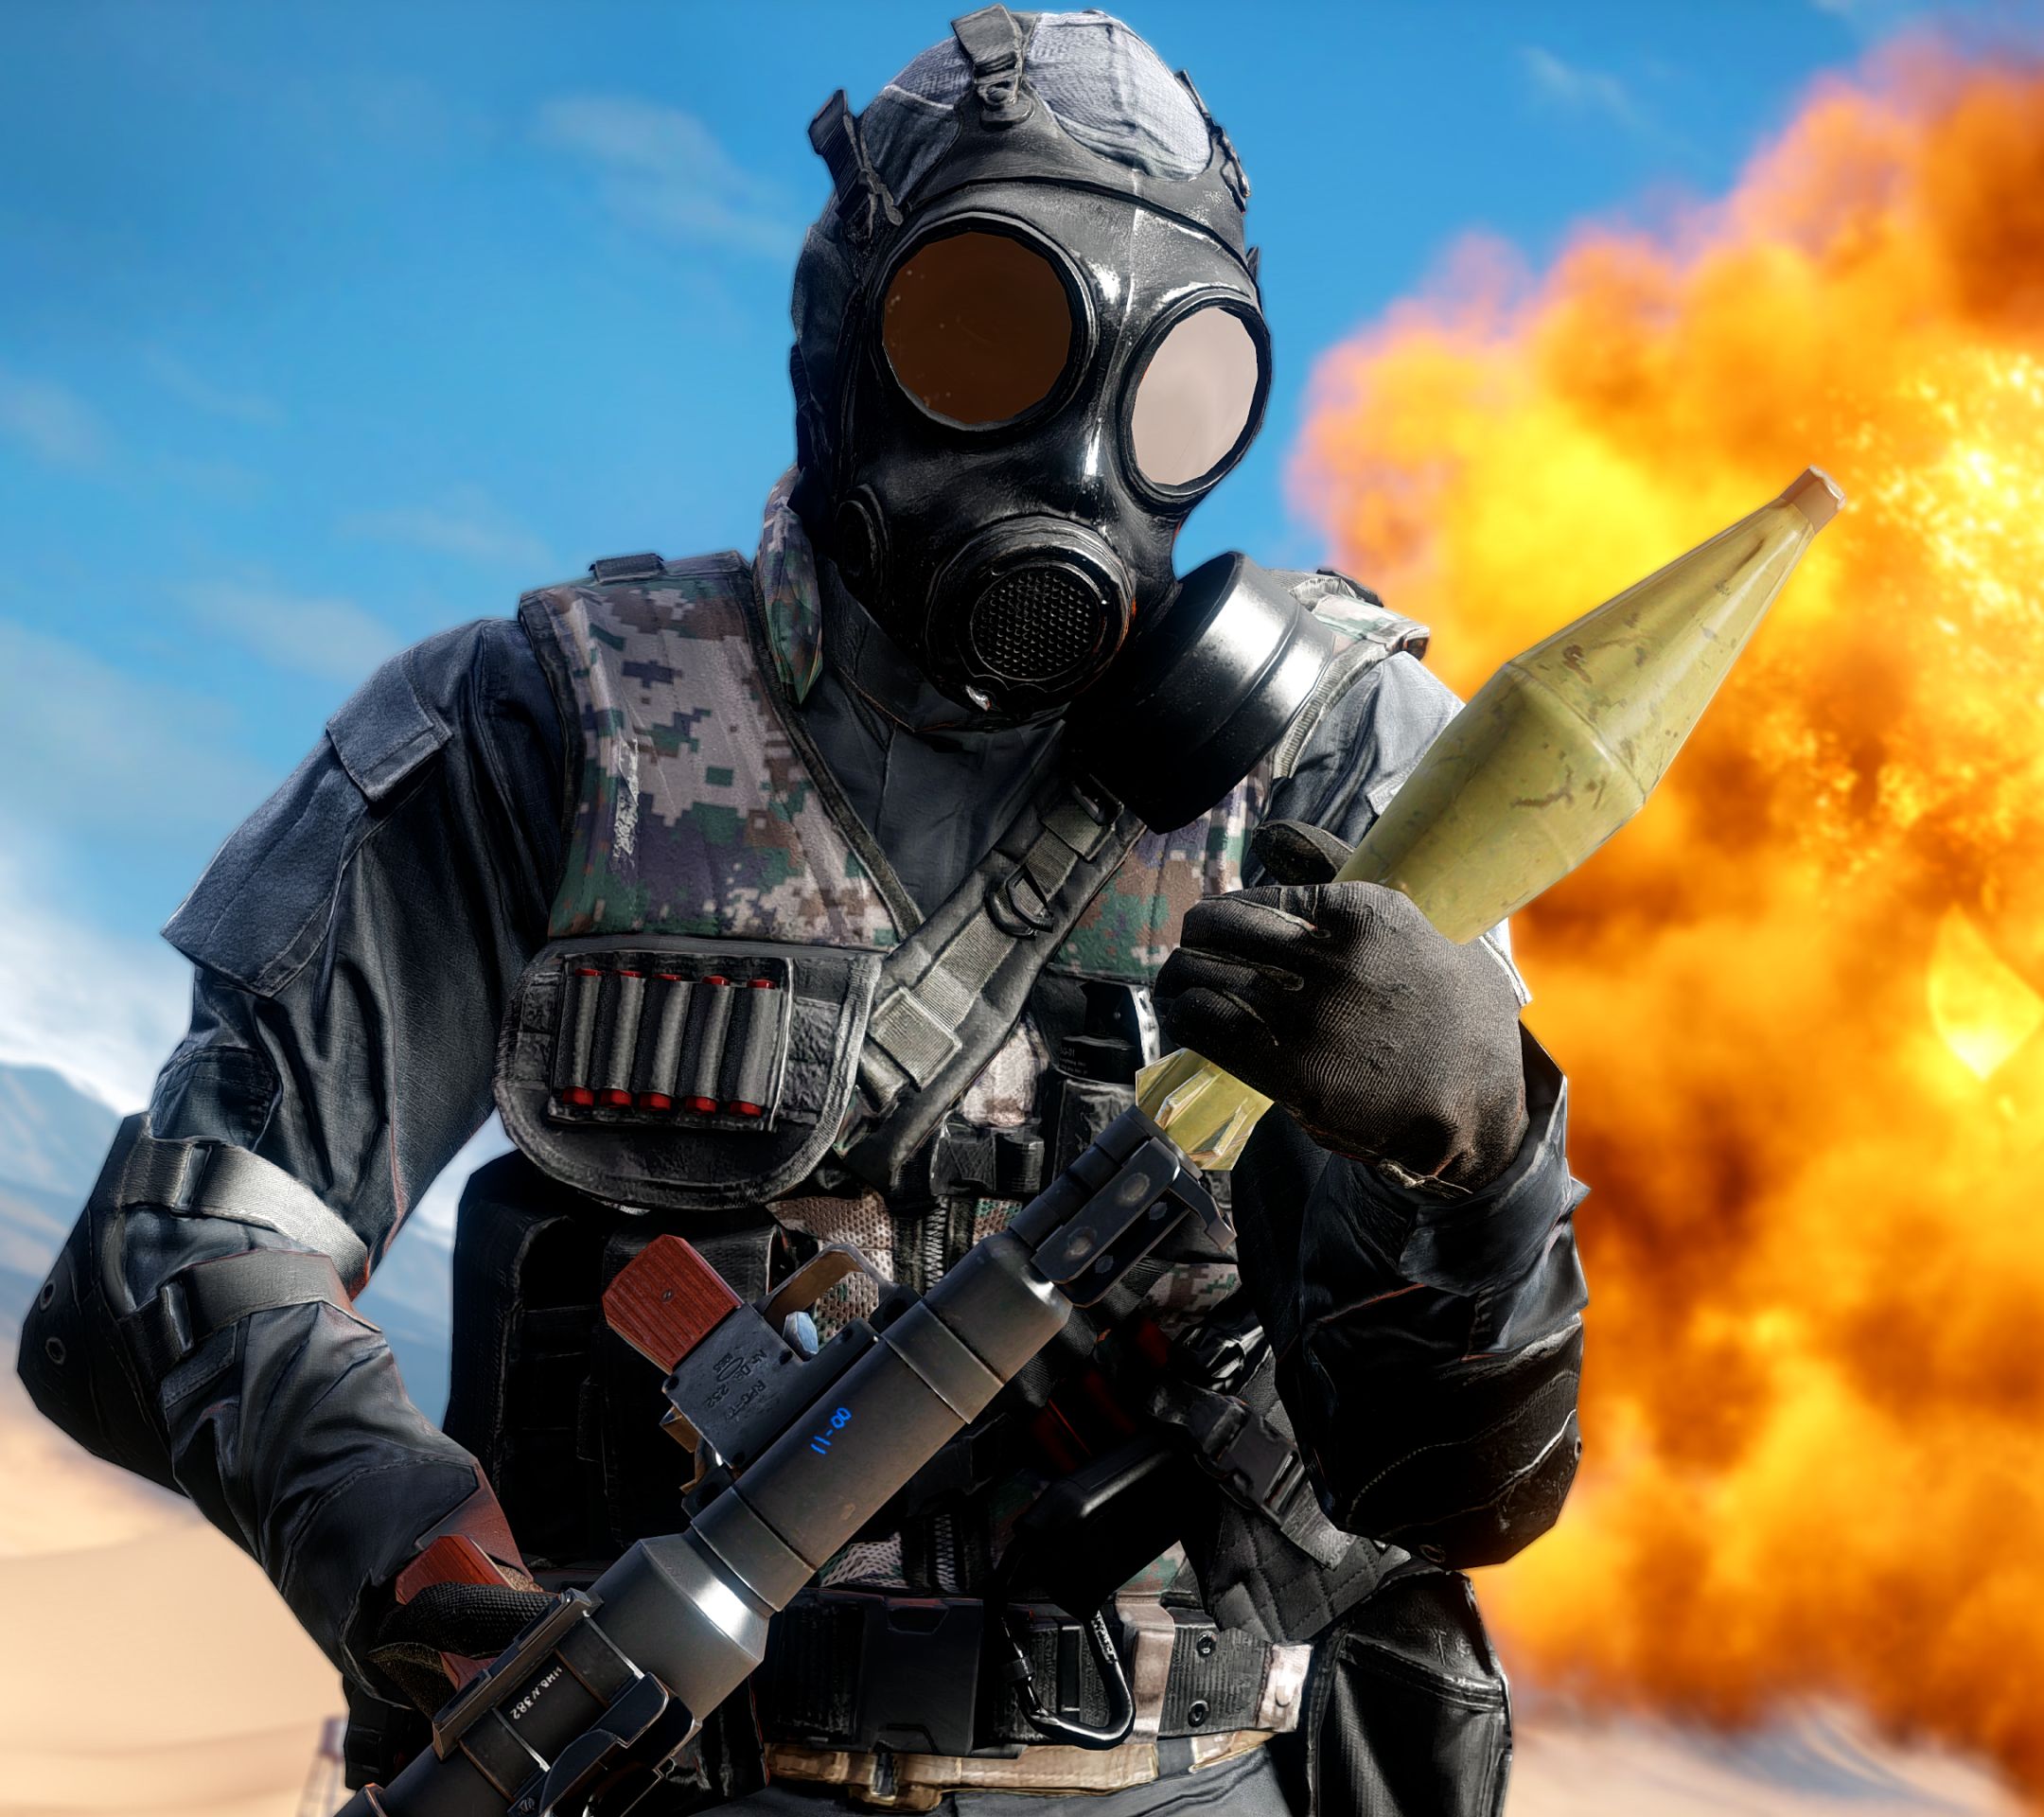 video game, battlefield 4, explosion, gas mask, soldier, rocket launcher, battlefield